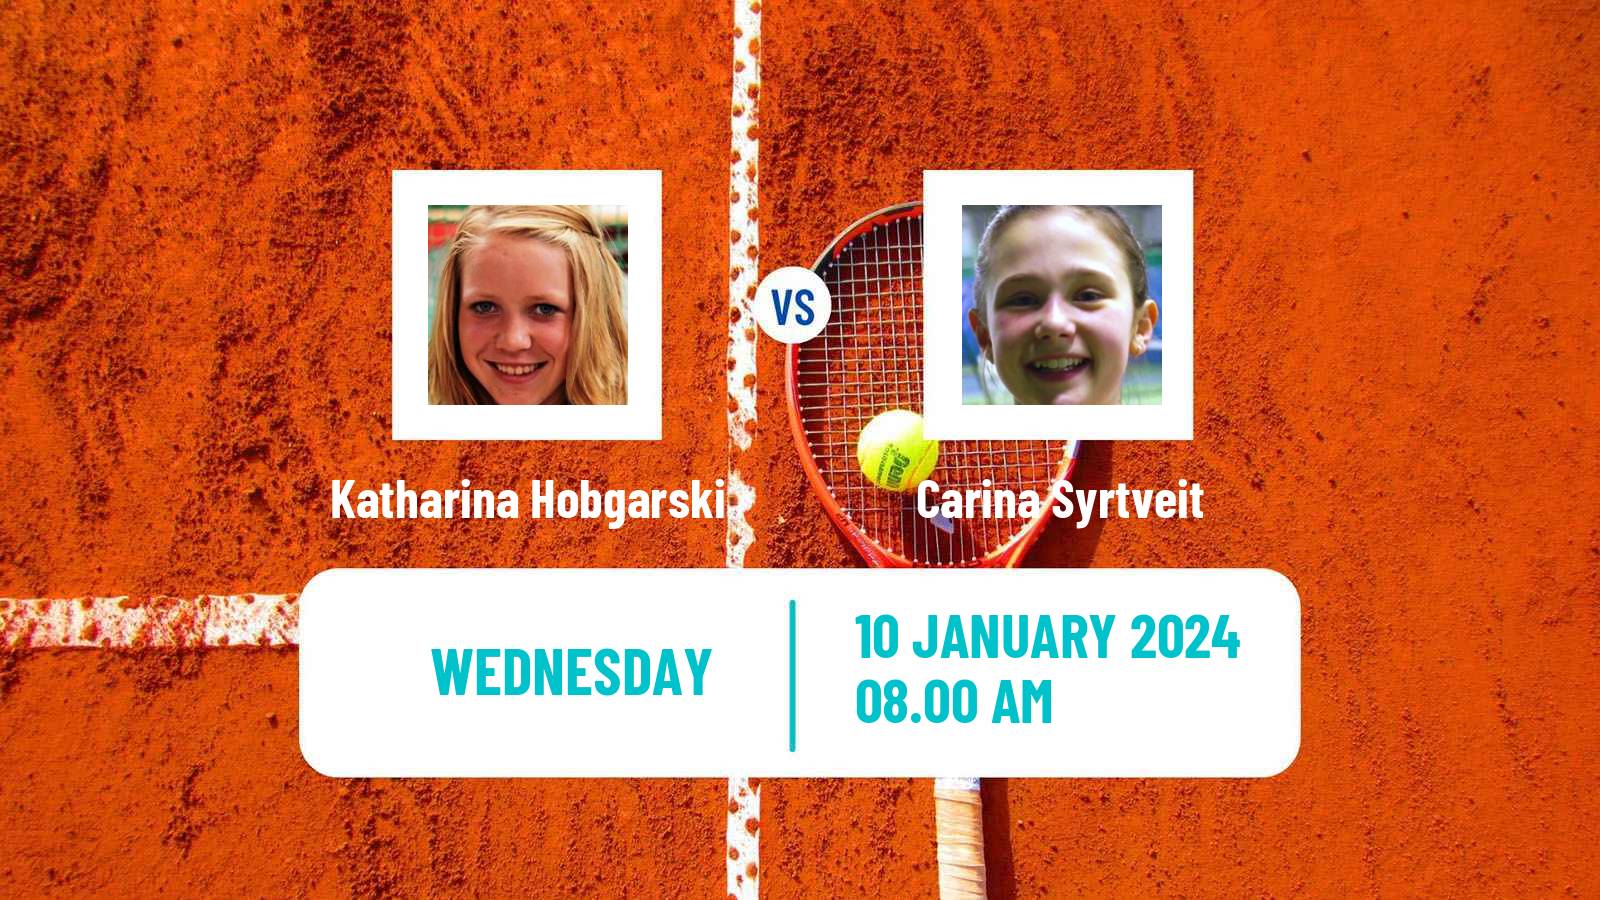 Tennis ITF W15 Esch Alzette Women Katharina Hobgarski - Carina Syrtveit